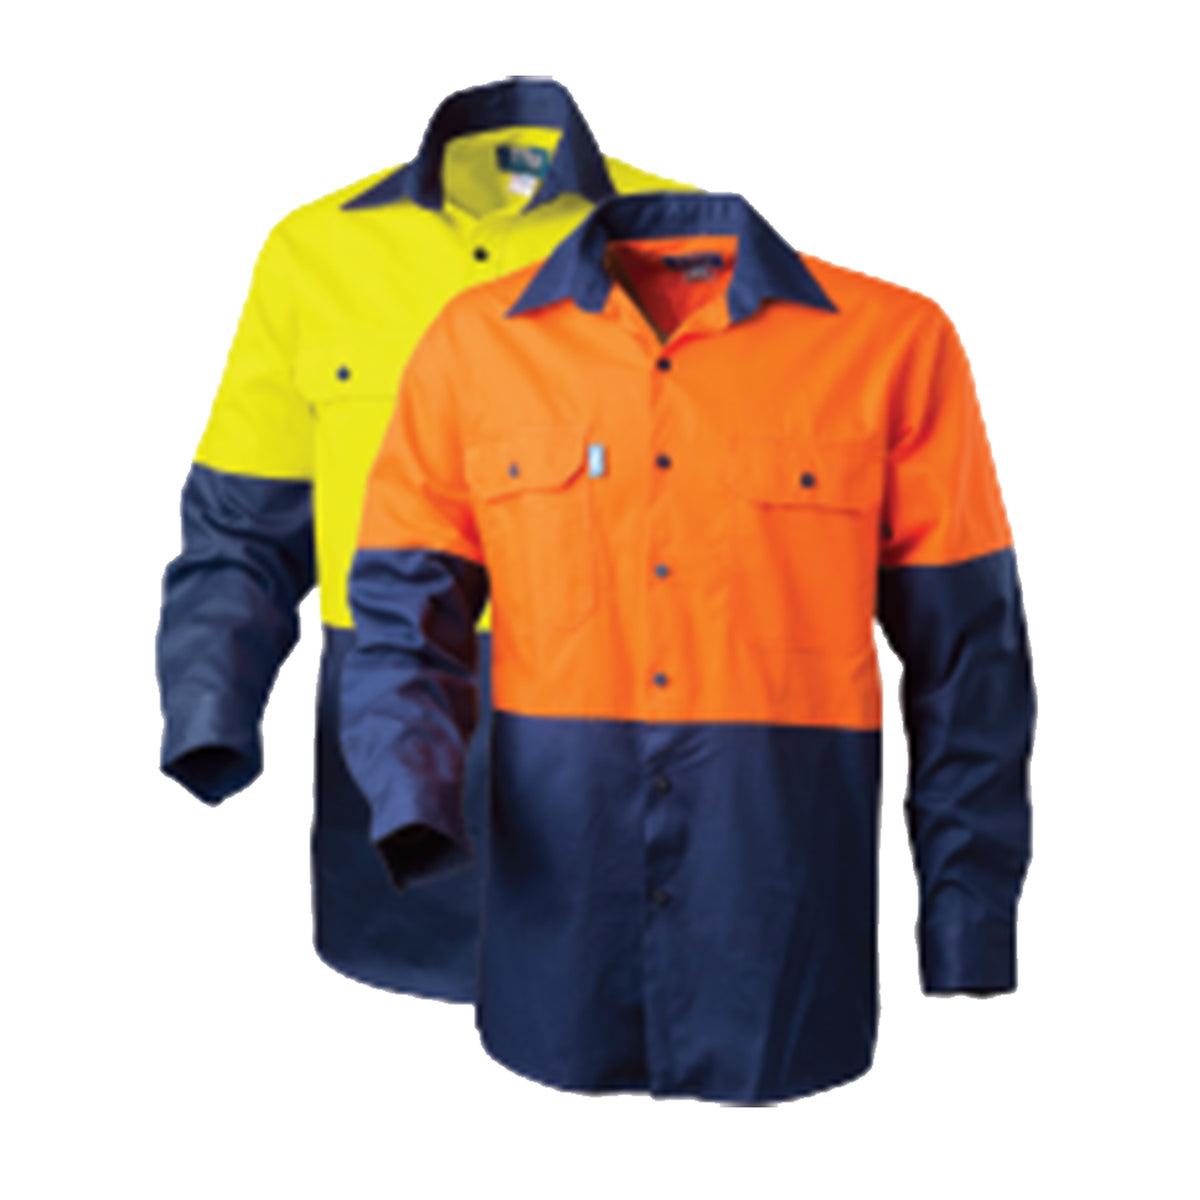 regular weight hi vis cotton shirt in yellow navy and orange navy